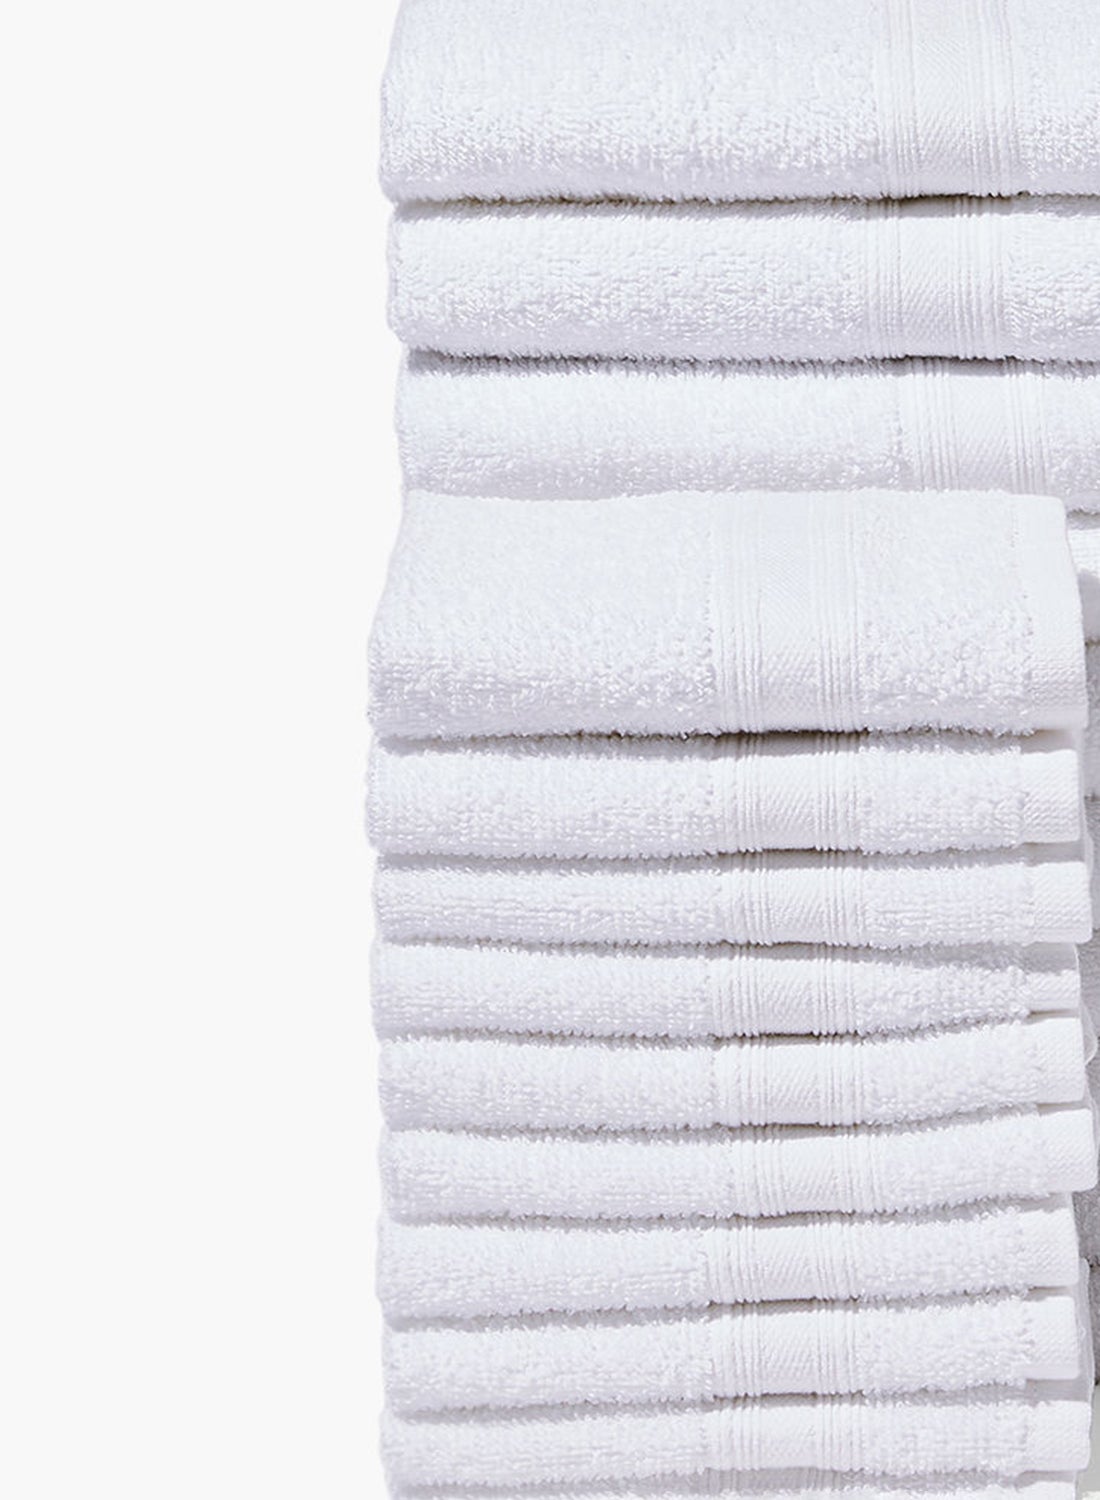 20 Piece Bathroom Towel Set - 400 GSM 100% Cotton Terry - 10 Hand Towel - 10 Face Towel - White Color -Quick Dry - Super Absorbent 